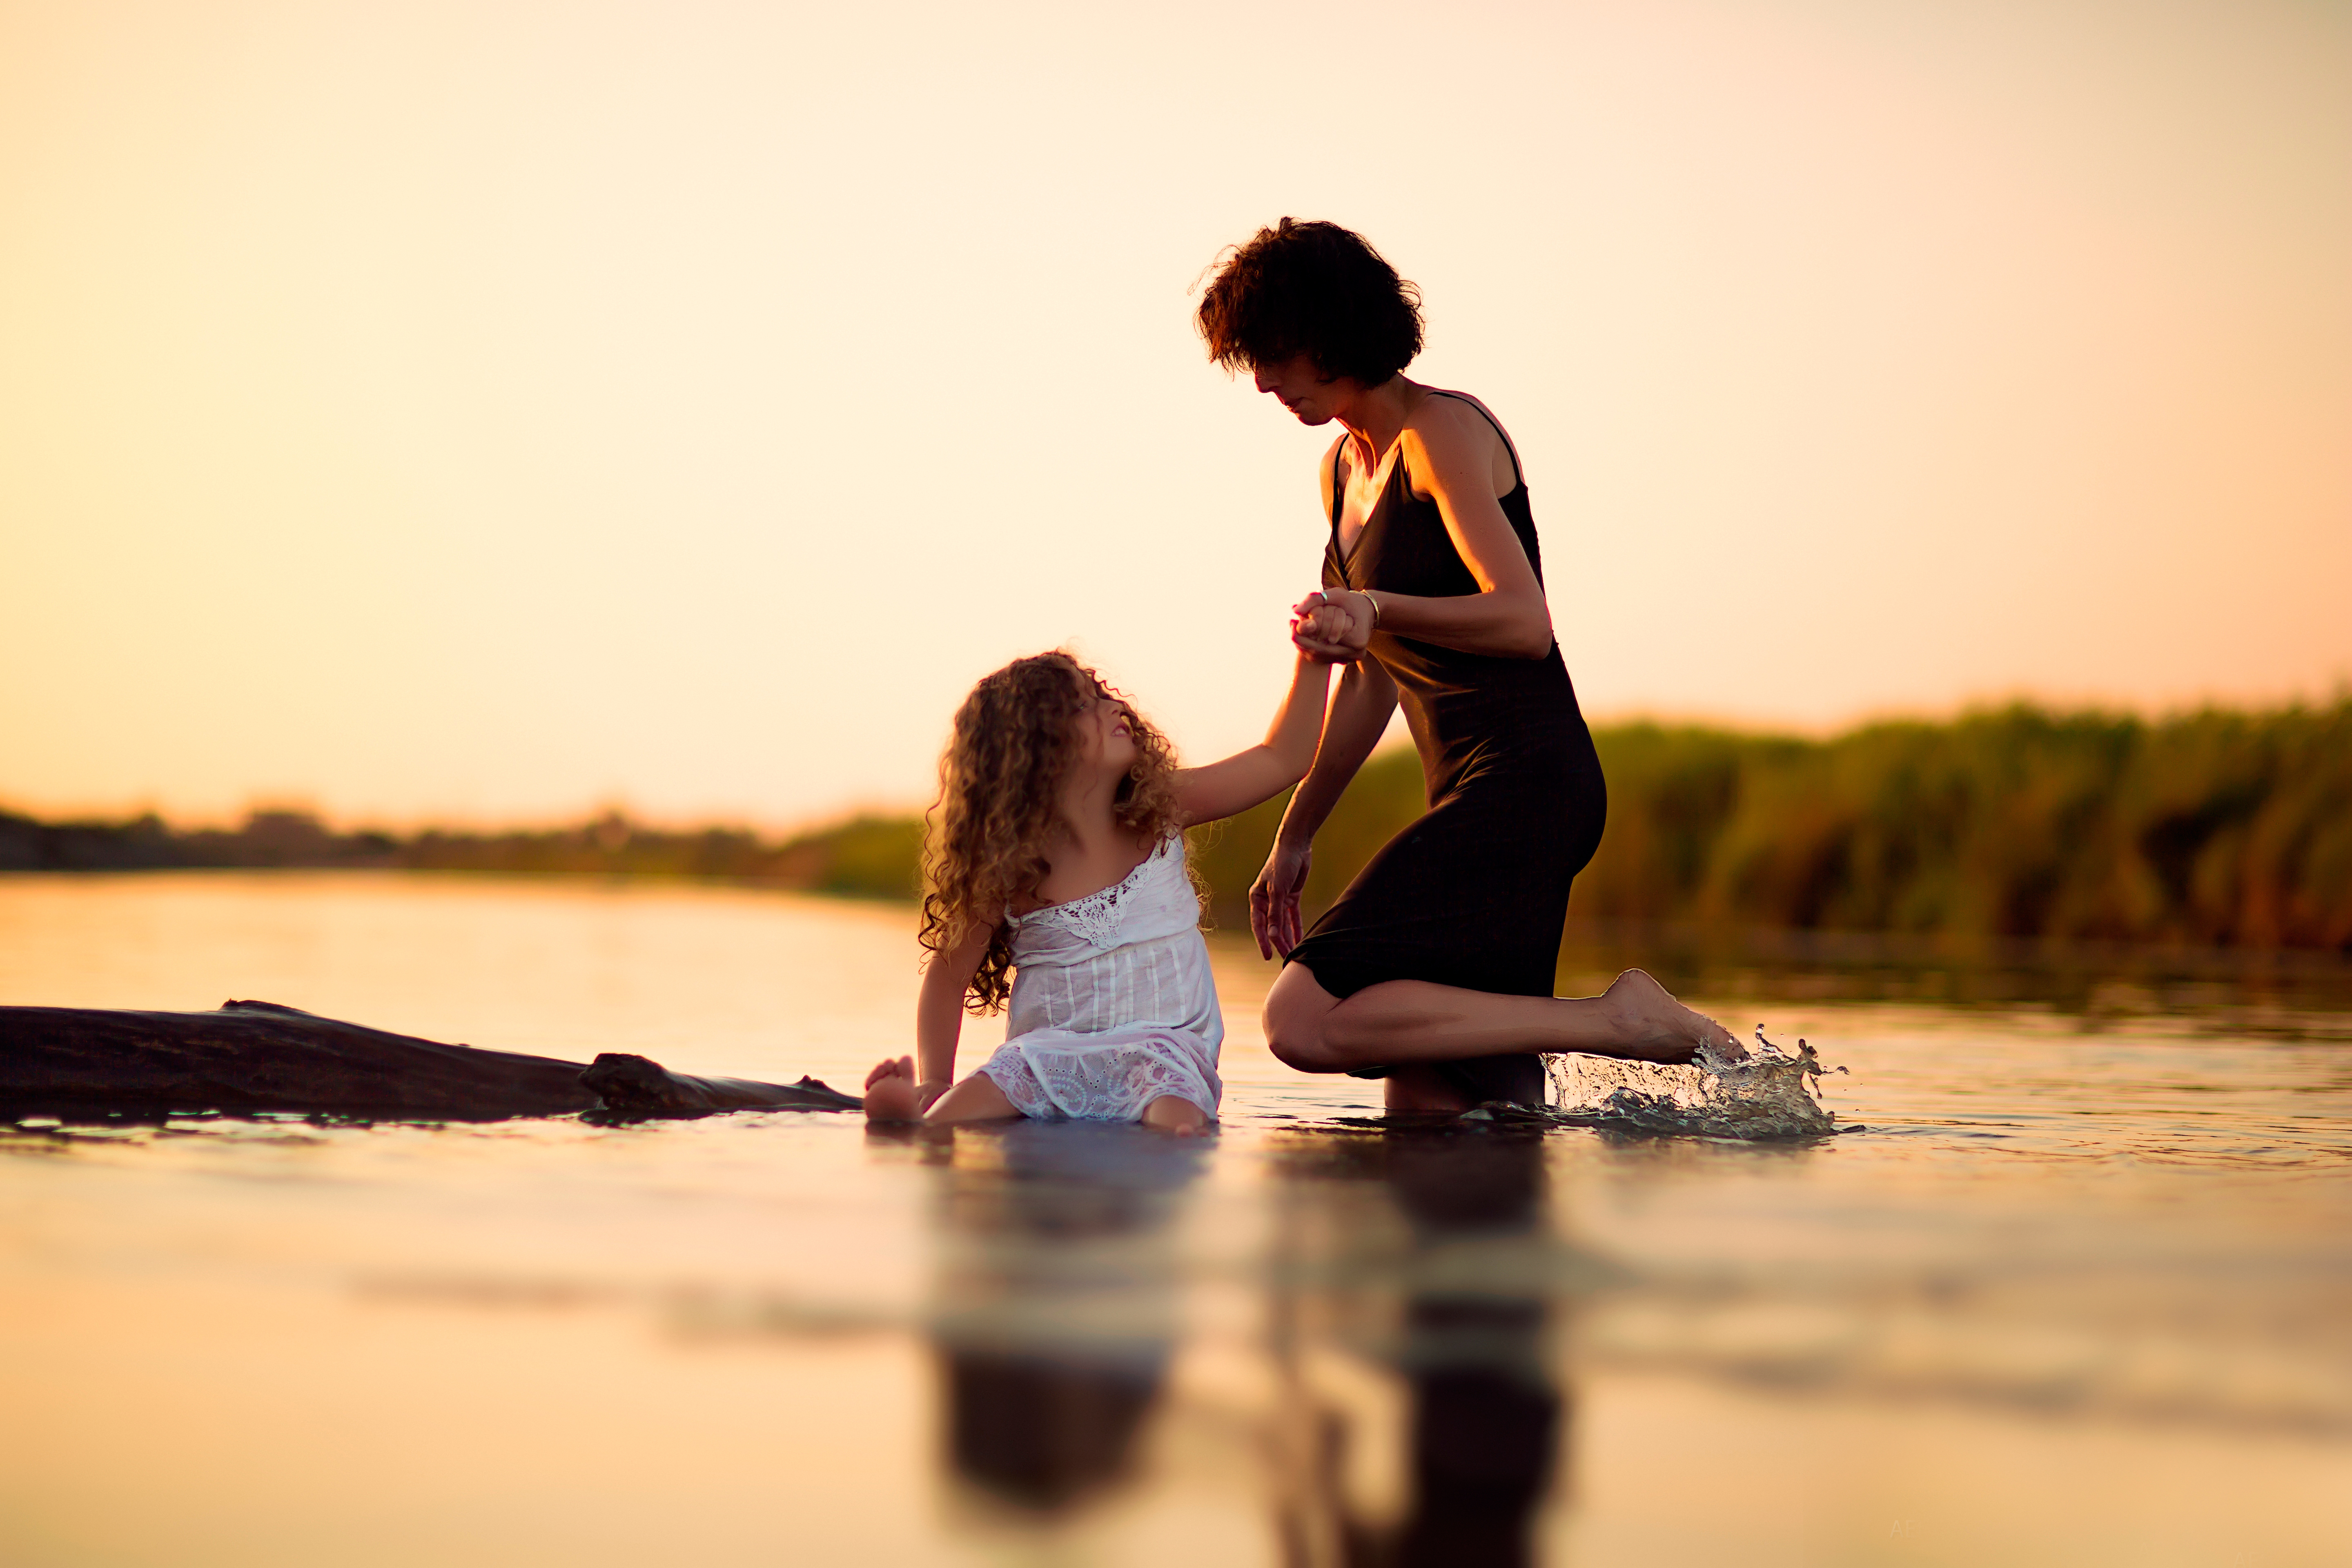 Ru daughter. Мама и дочка. Малыш и мама. Мама с дочкой в воде. Фотосессия мама и дочка на море.